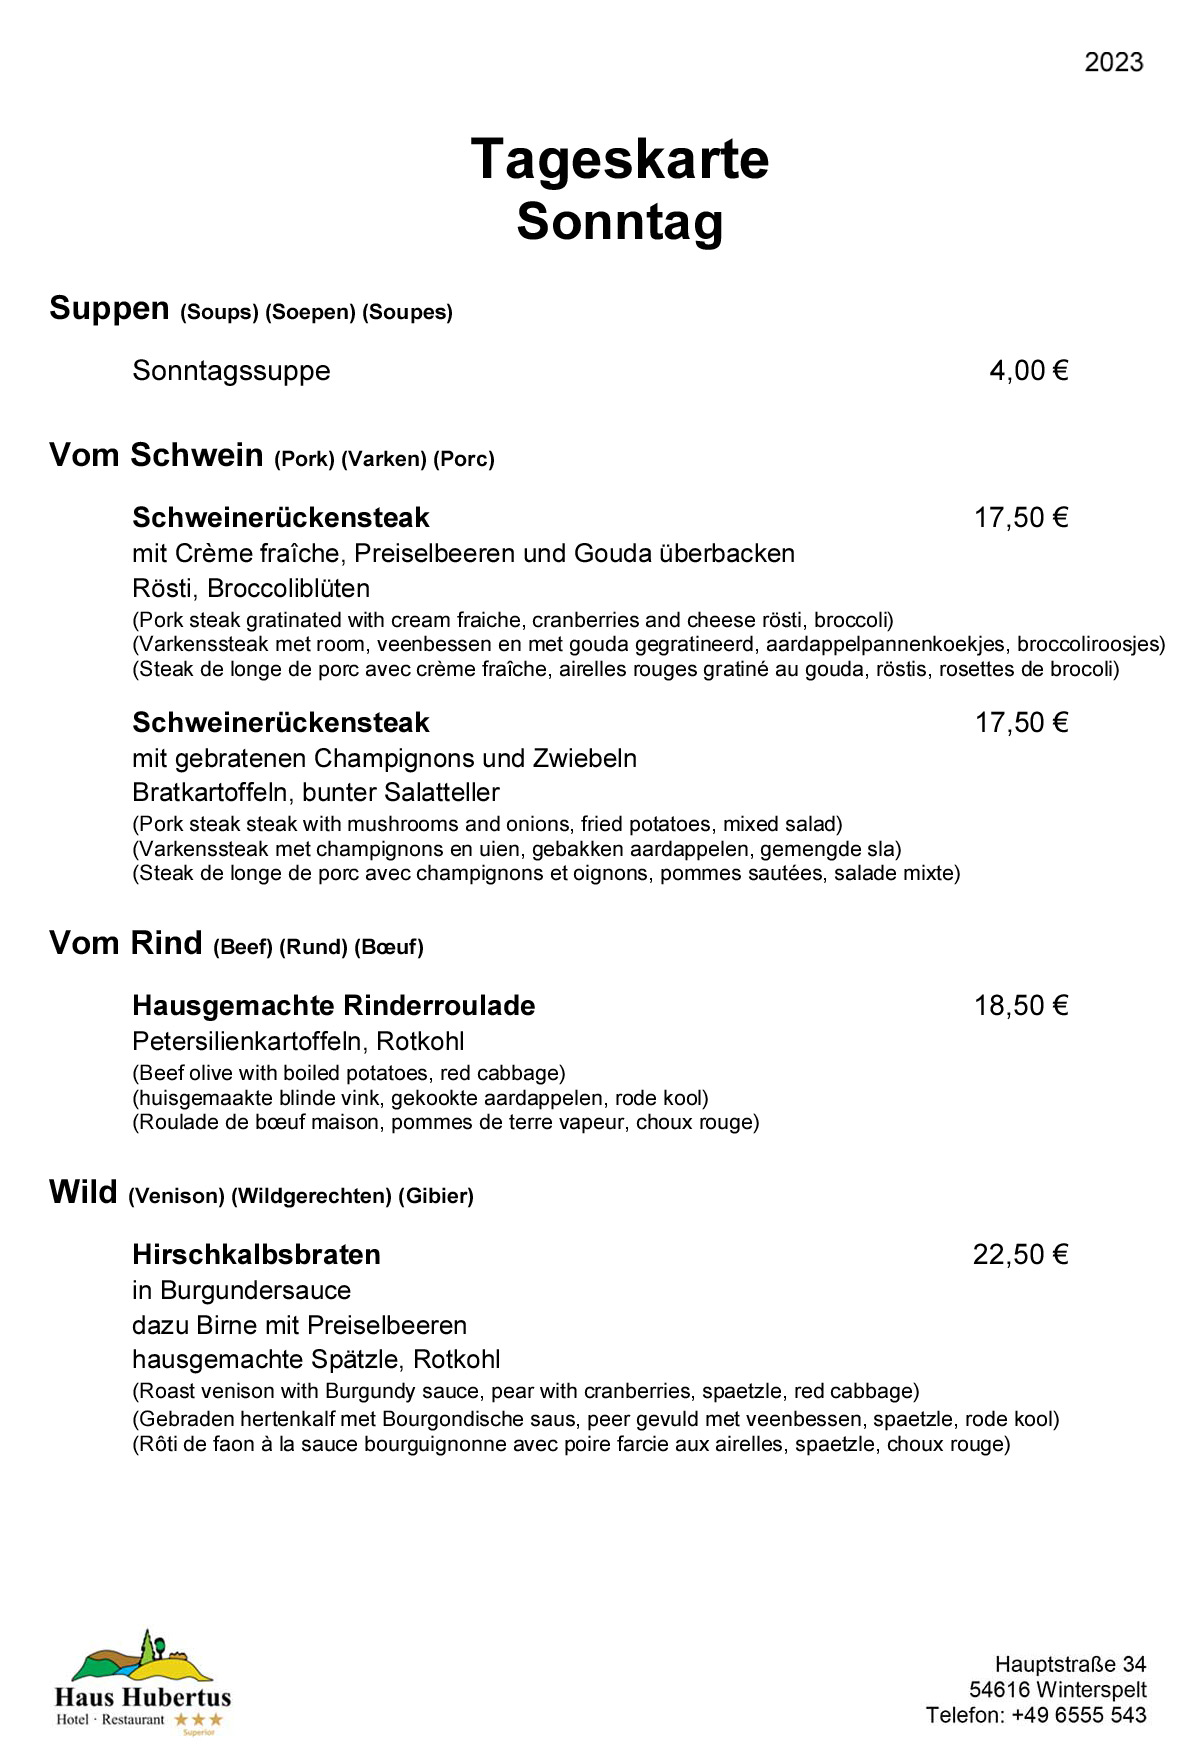 Hotel - Restaurant Haus Hubertus - Speisekarte 02/2023 - Tageskarte / Sonntag